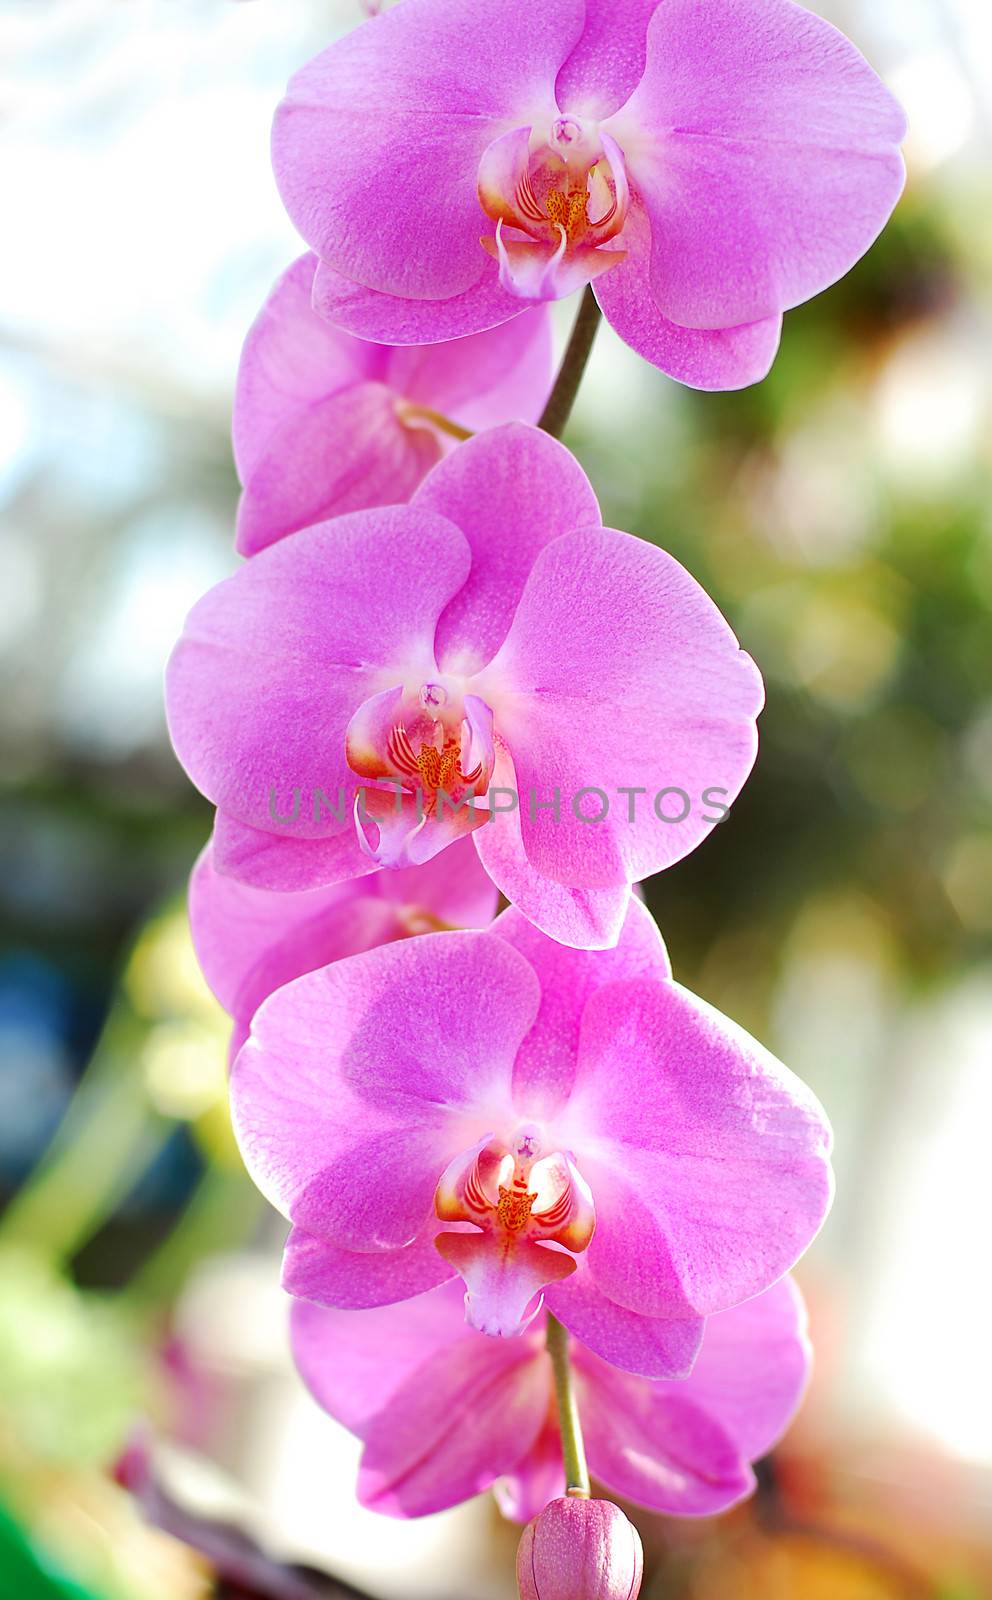 Phalaenopsis Pink white orchid flower by nikonite